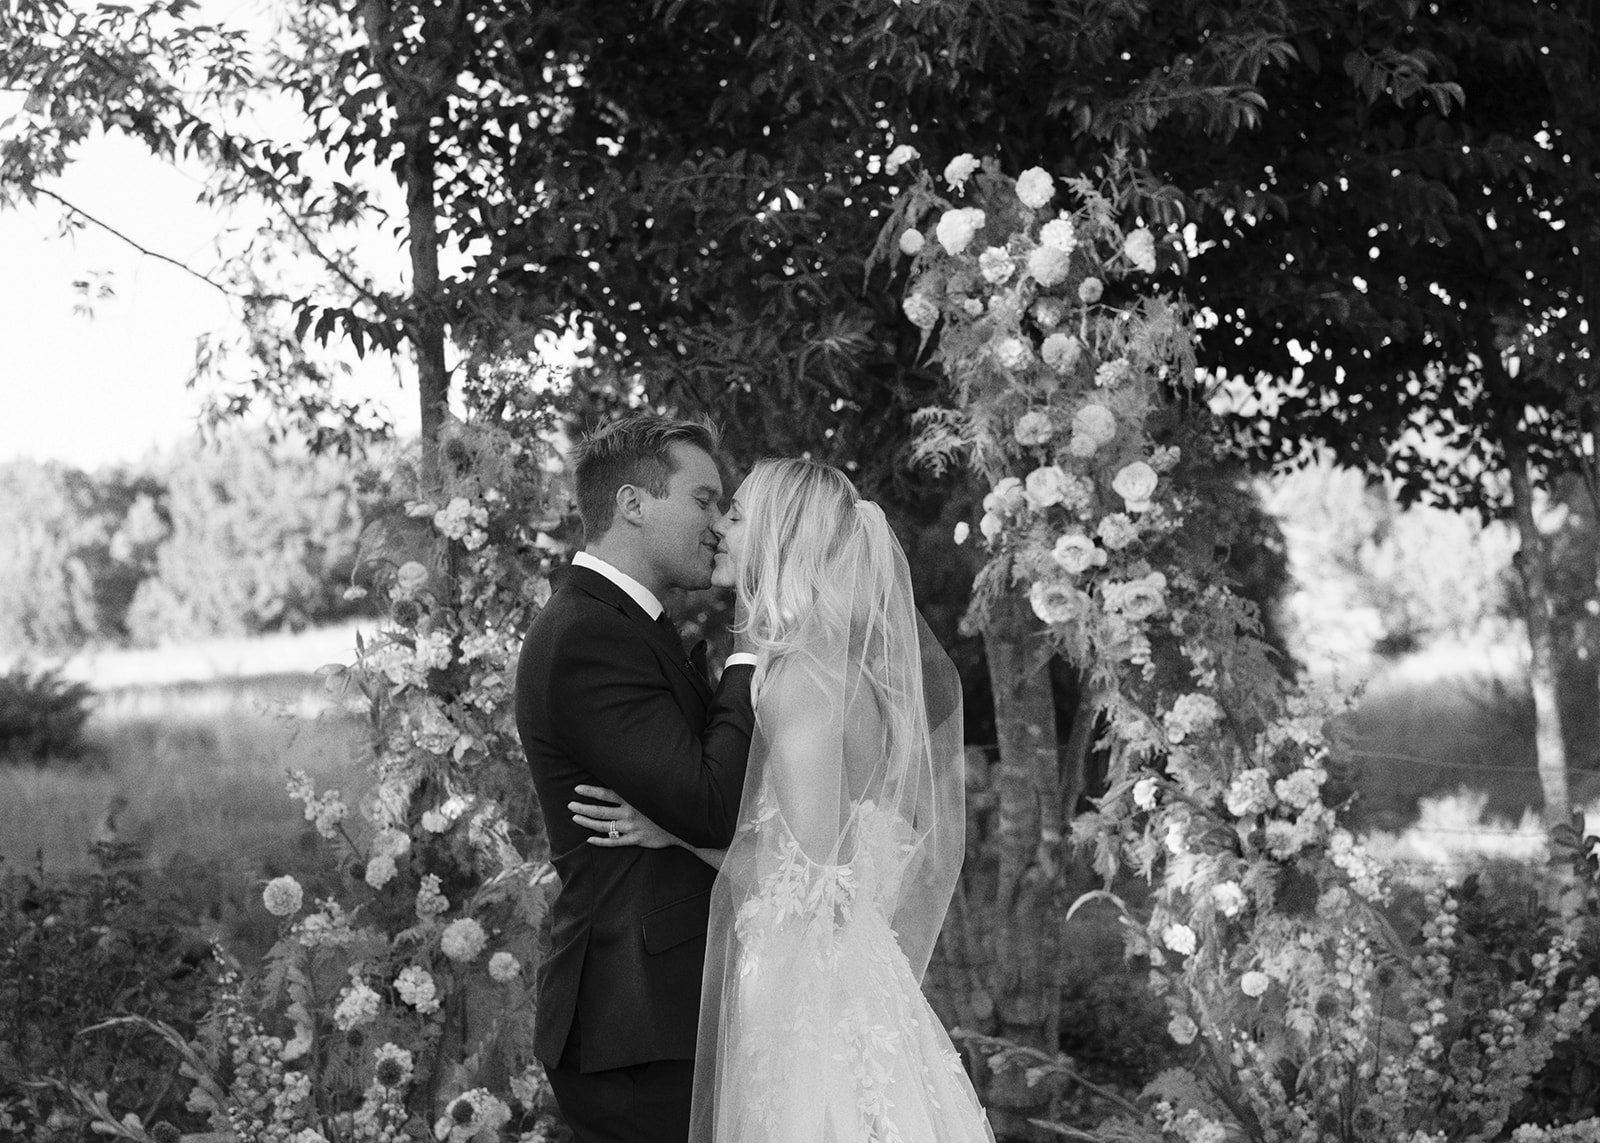 Best-Austin-Wedding-Photographers-Elopement-Film-35mm-Asheville-Santa-Barbara-Backyard-48.jpg